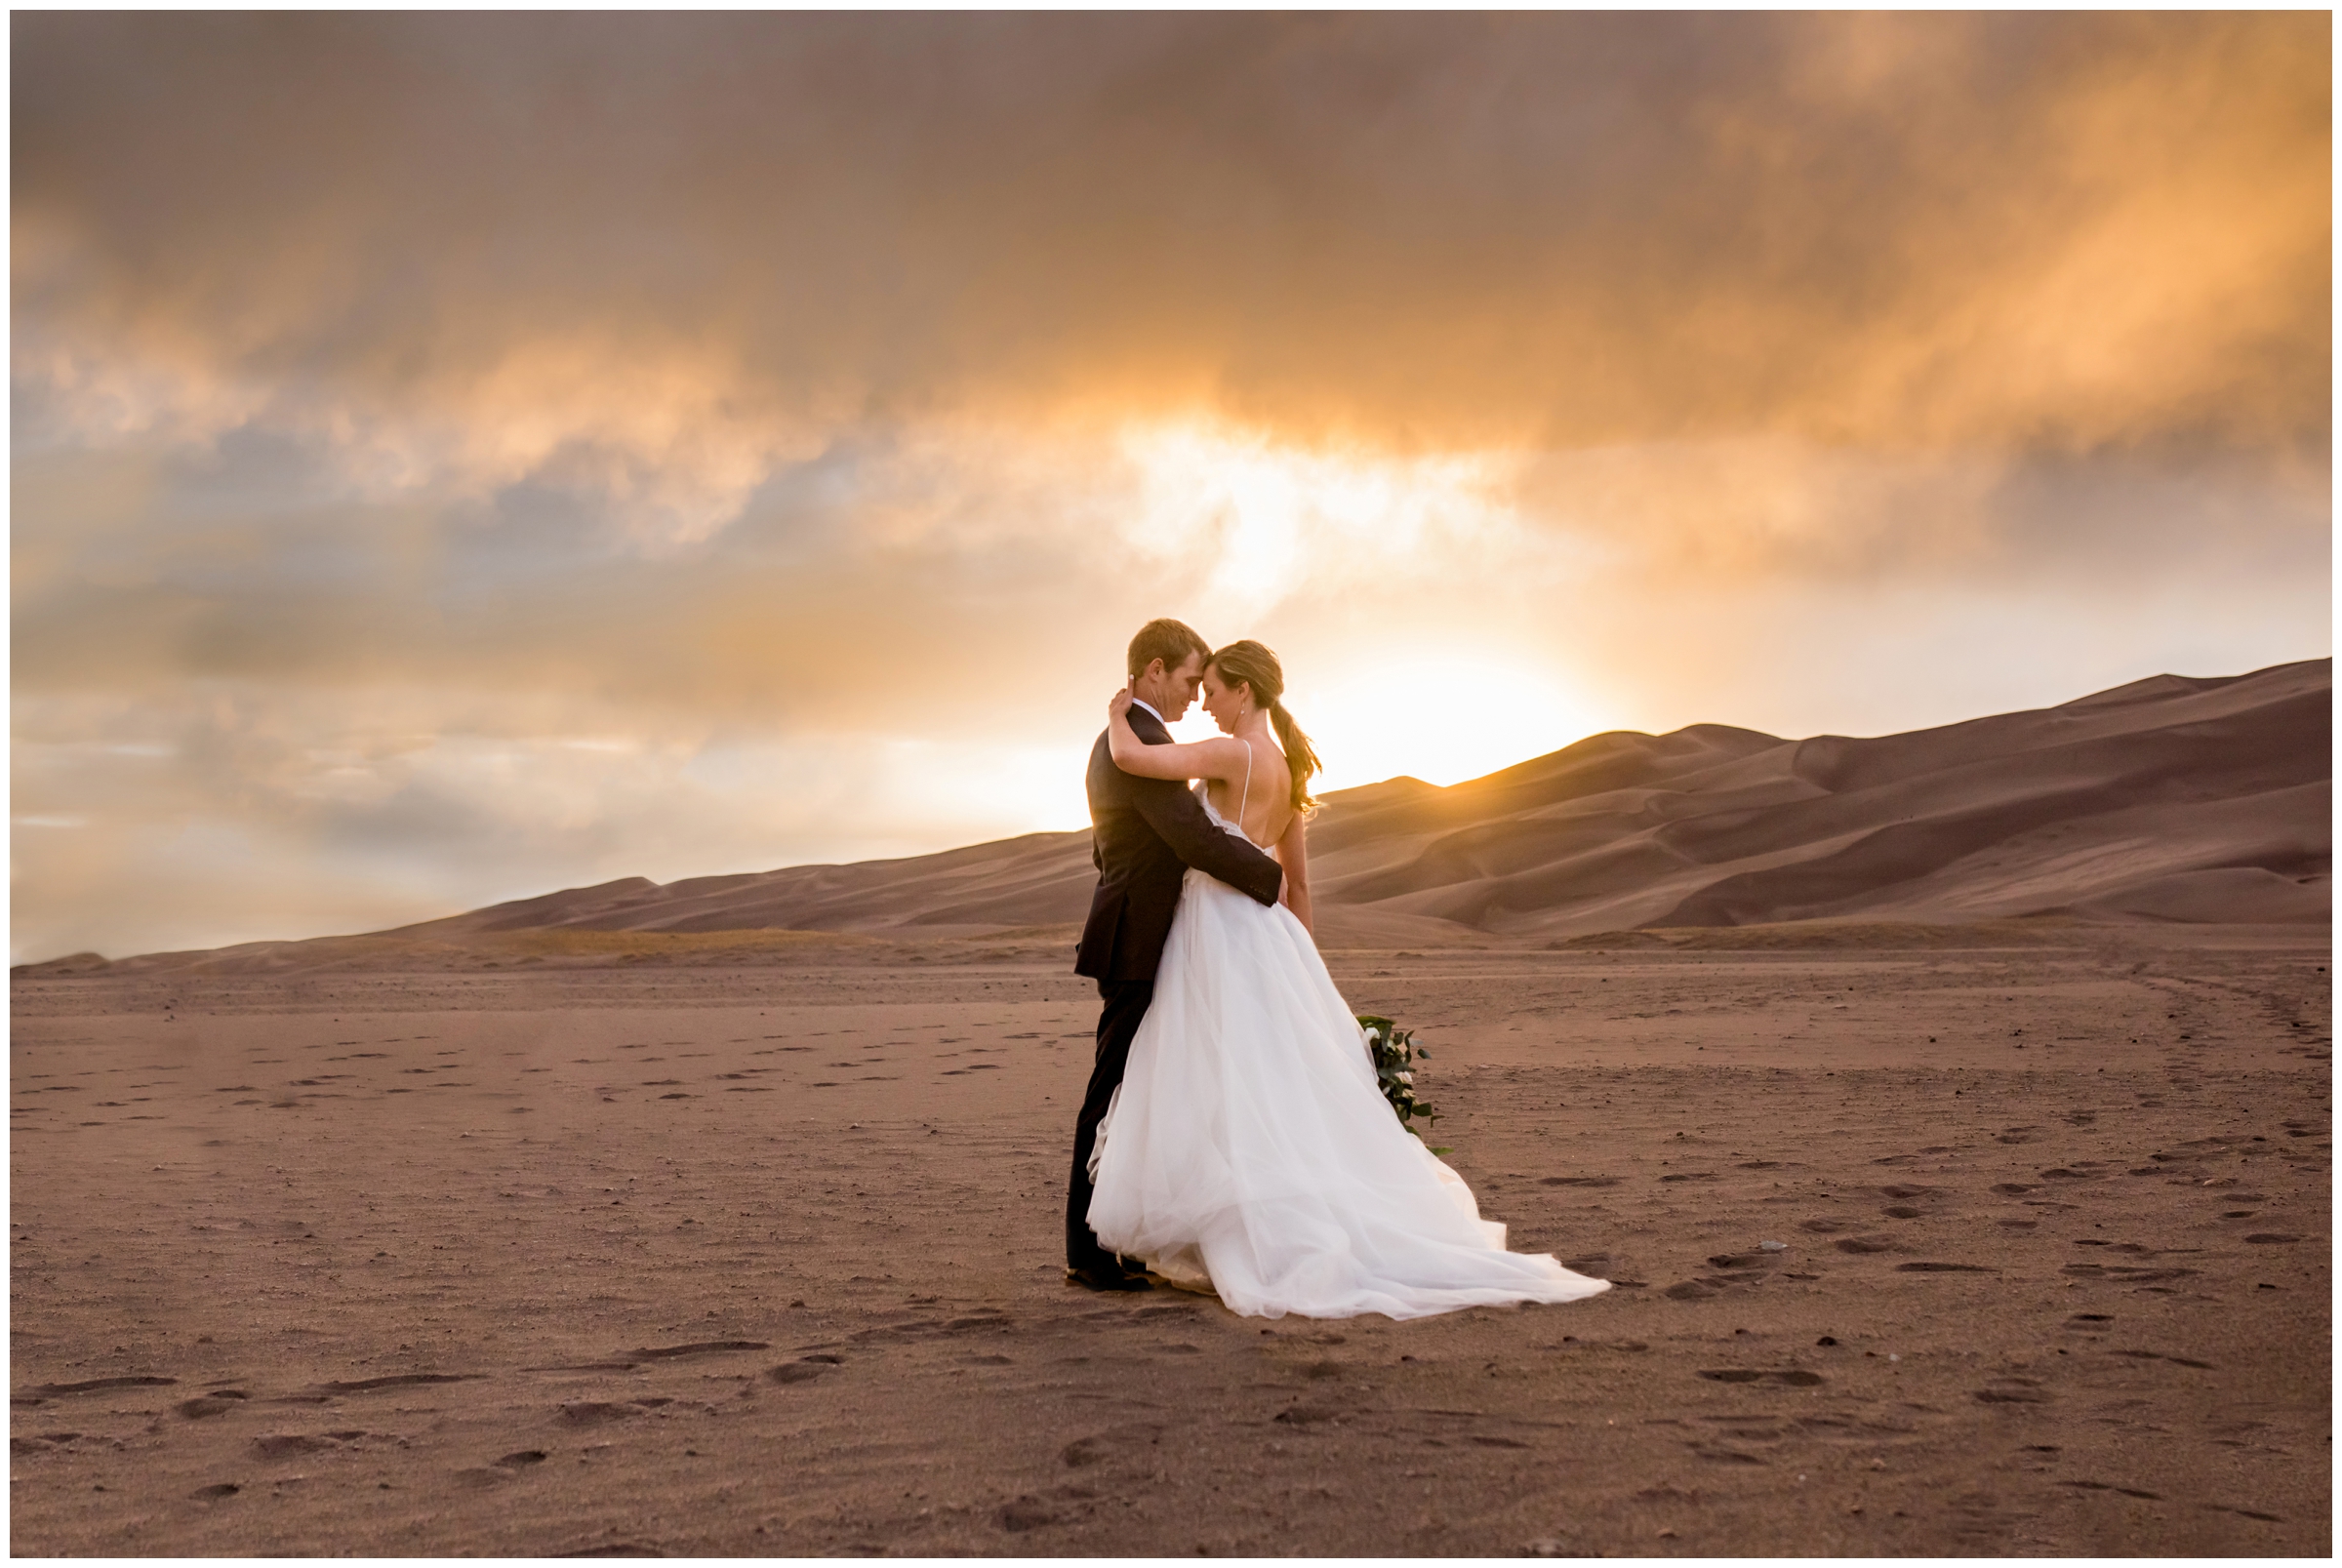 Sand Dunes Colorado wedding photos at sunset with dramatic skies 